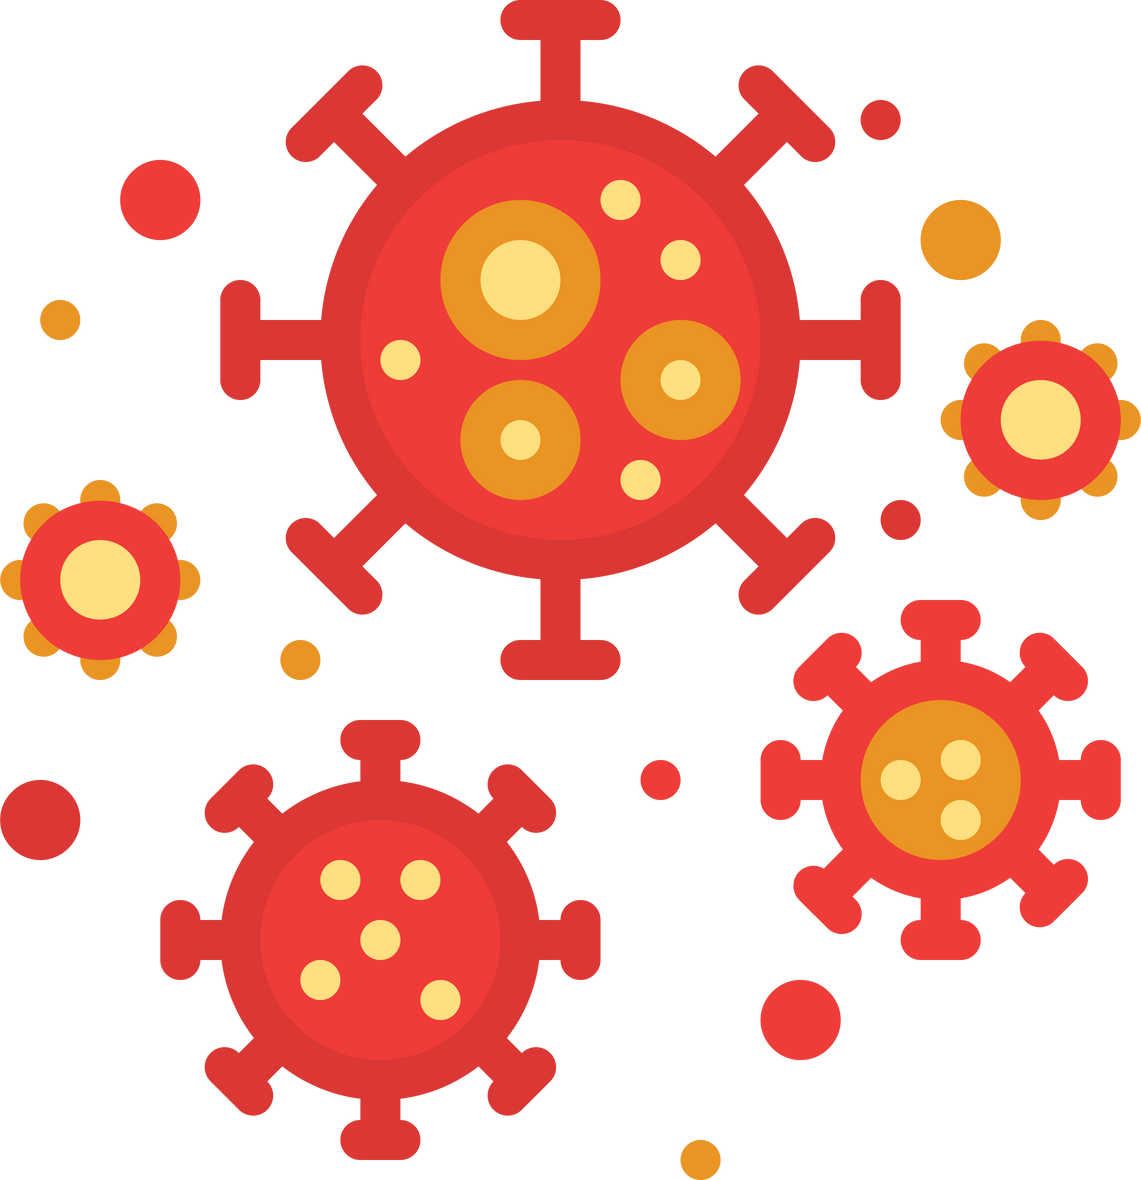 Coronavirus or Covid-19 Virus Icon. Medical Graphic Symbol.